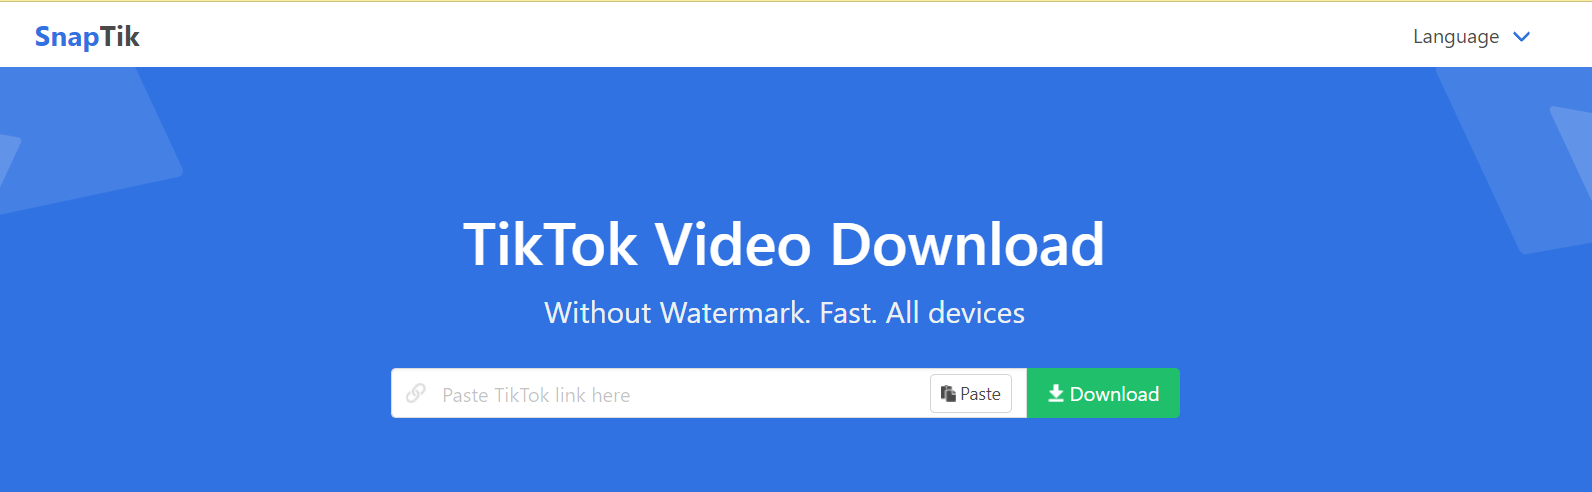 cara download video tiktok tanpa watermark iphone , download video TikTok tanpa watermark versi PC Snaptik Online